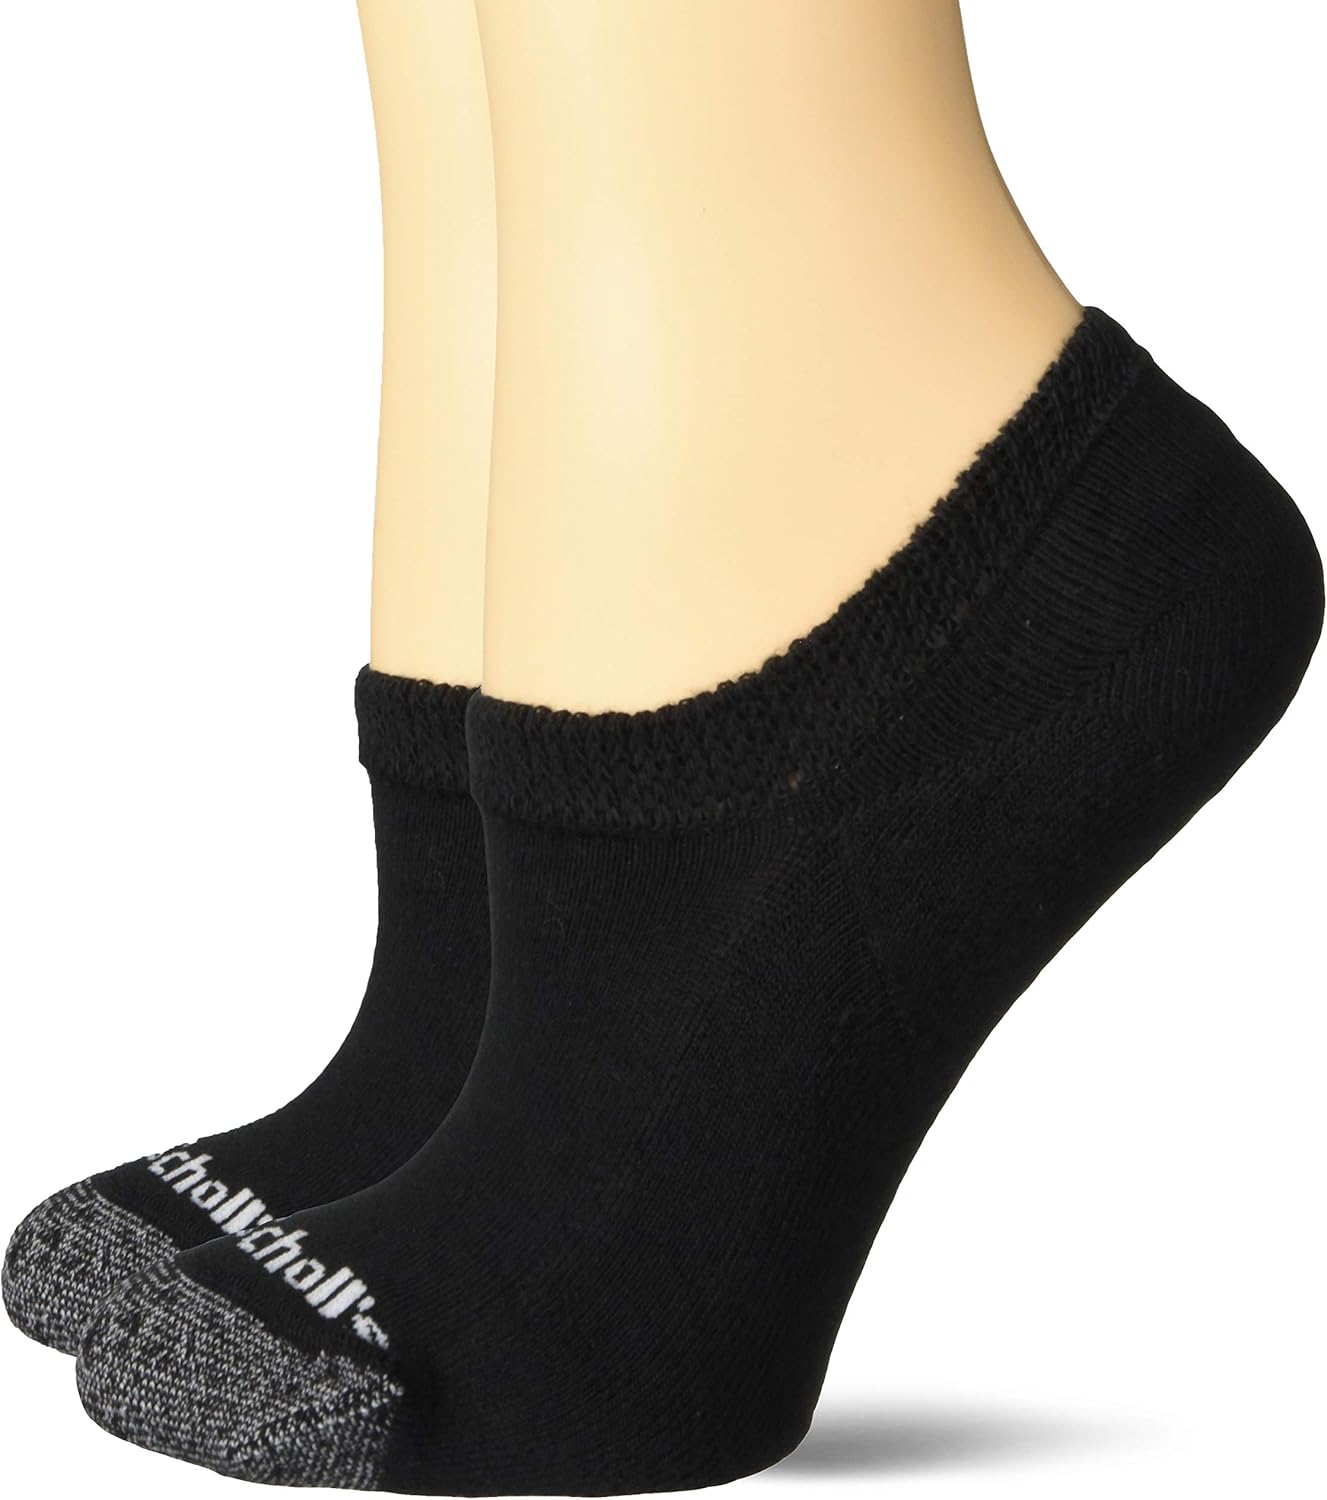 Dr. Scholl's Women's Advanced Relief Blisterguard - 2 & 3 Pair Packs Sock, Black, 4 10 US